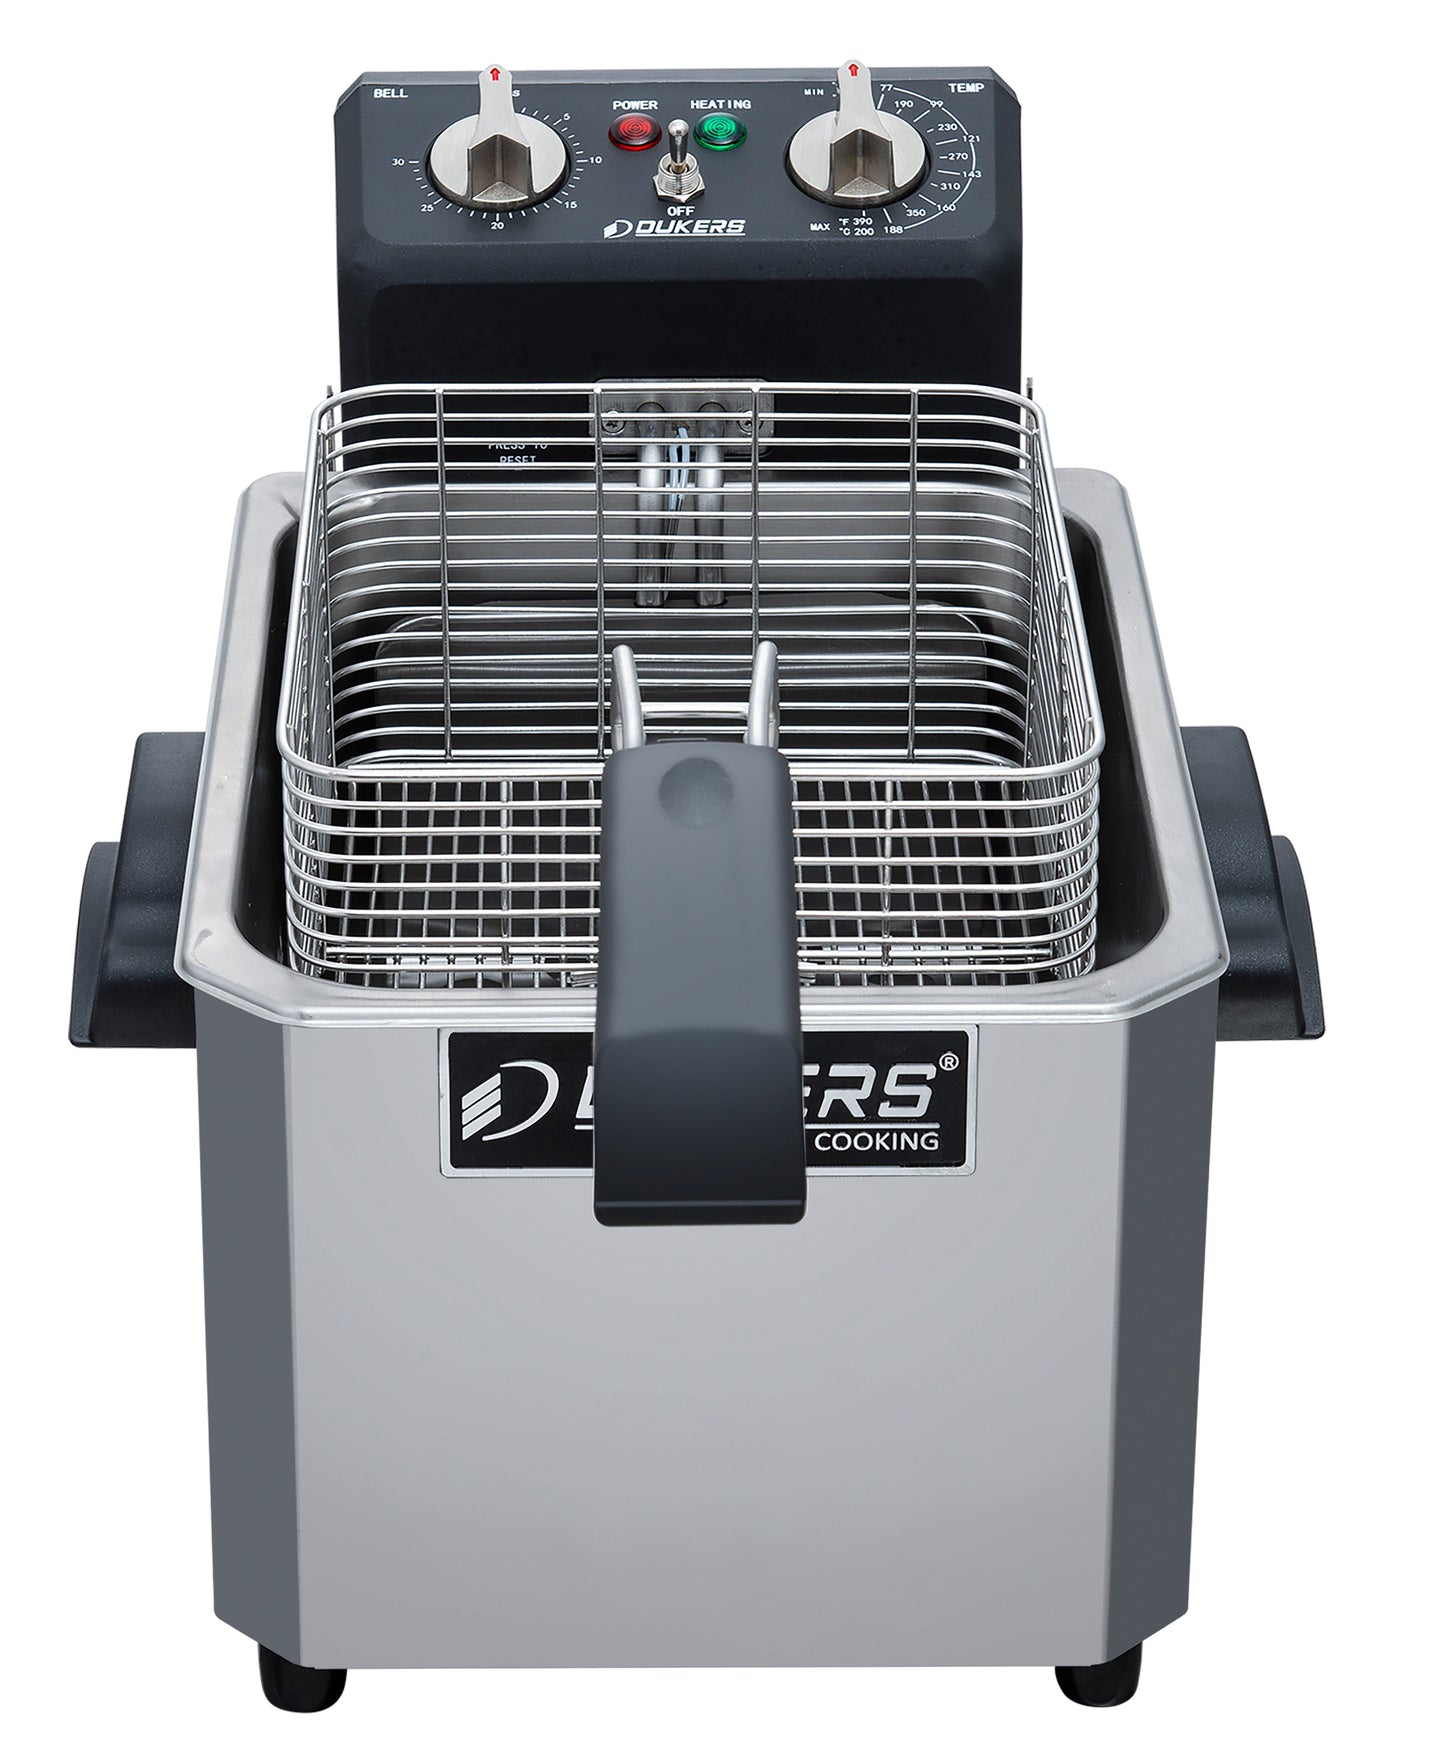 Dukers DCF10E Electric Fryer 10 liter single pot